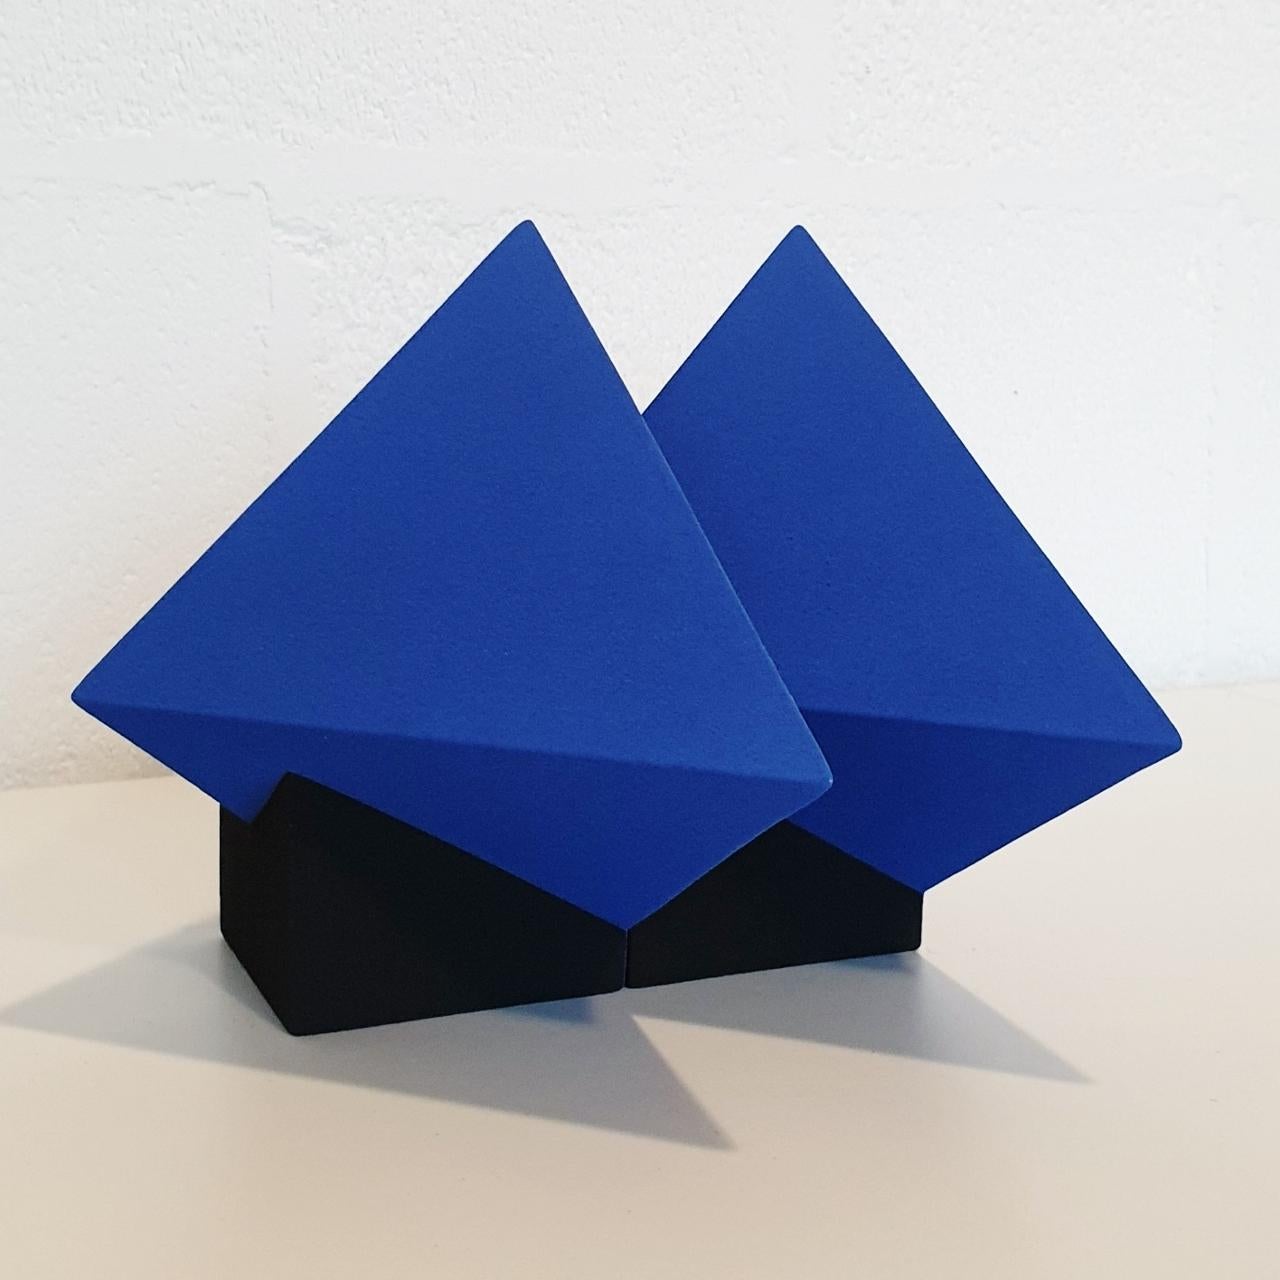 Let de Kok Abstract Sculpture - SC1502 blue - contemporary modern abstract geometric ceramic object sculpture